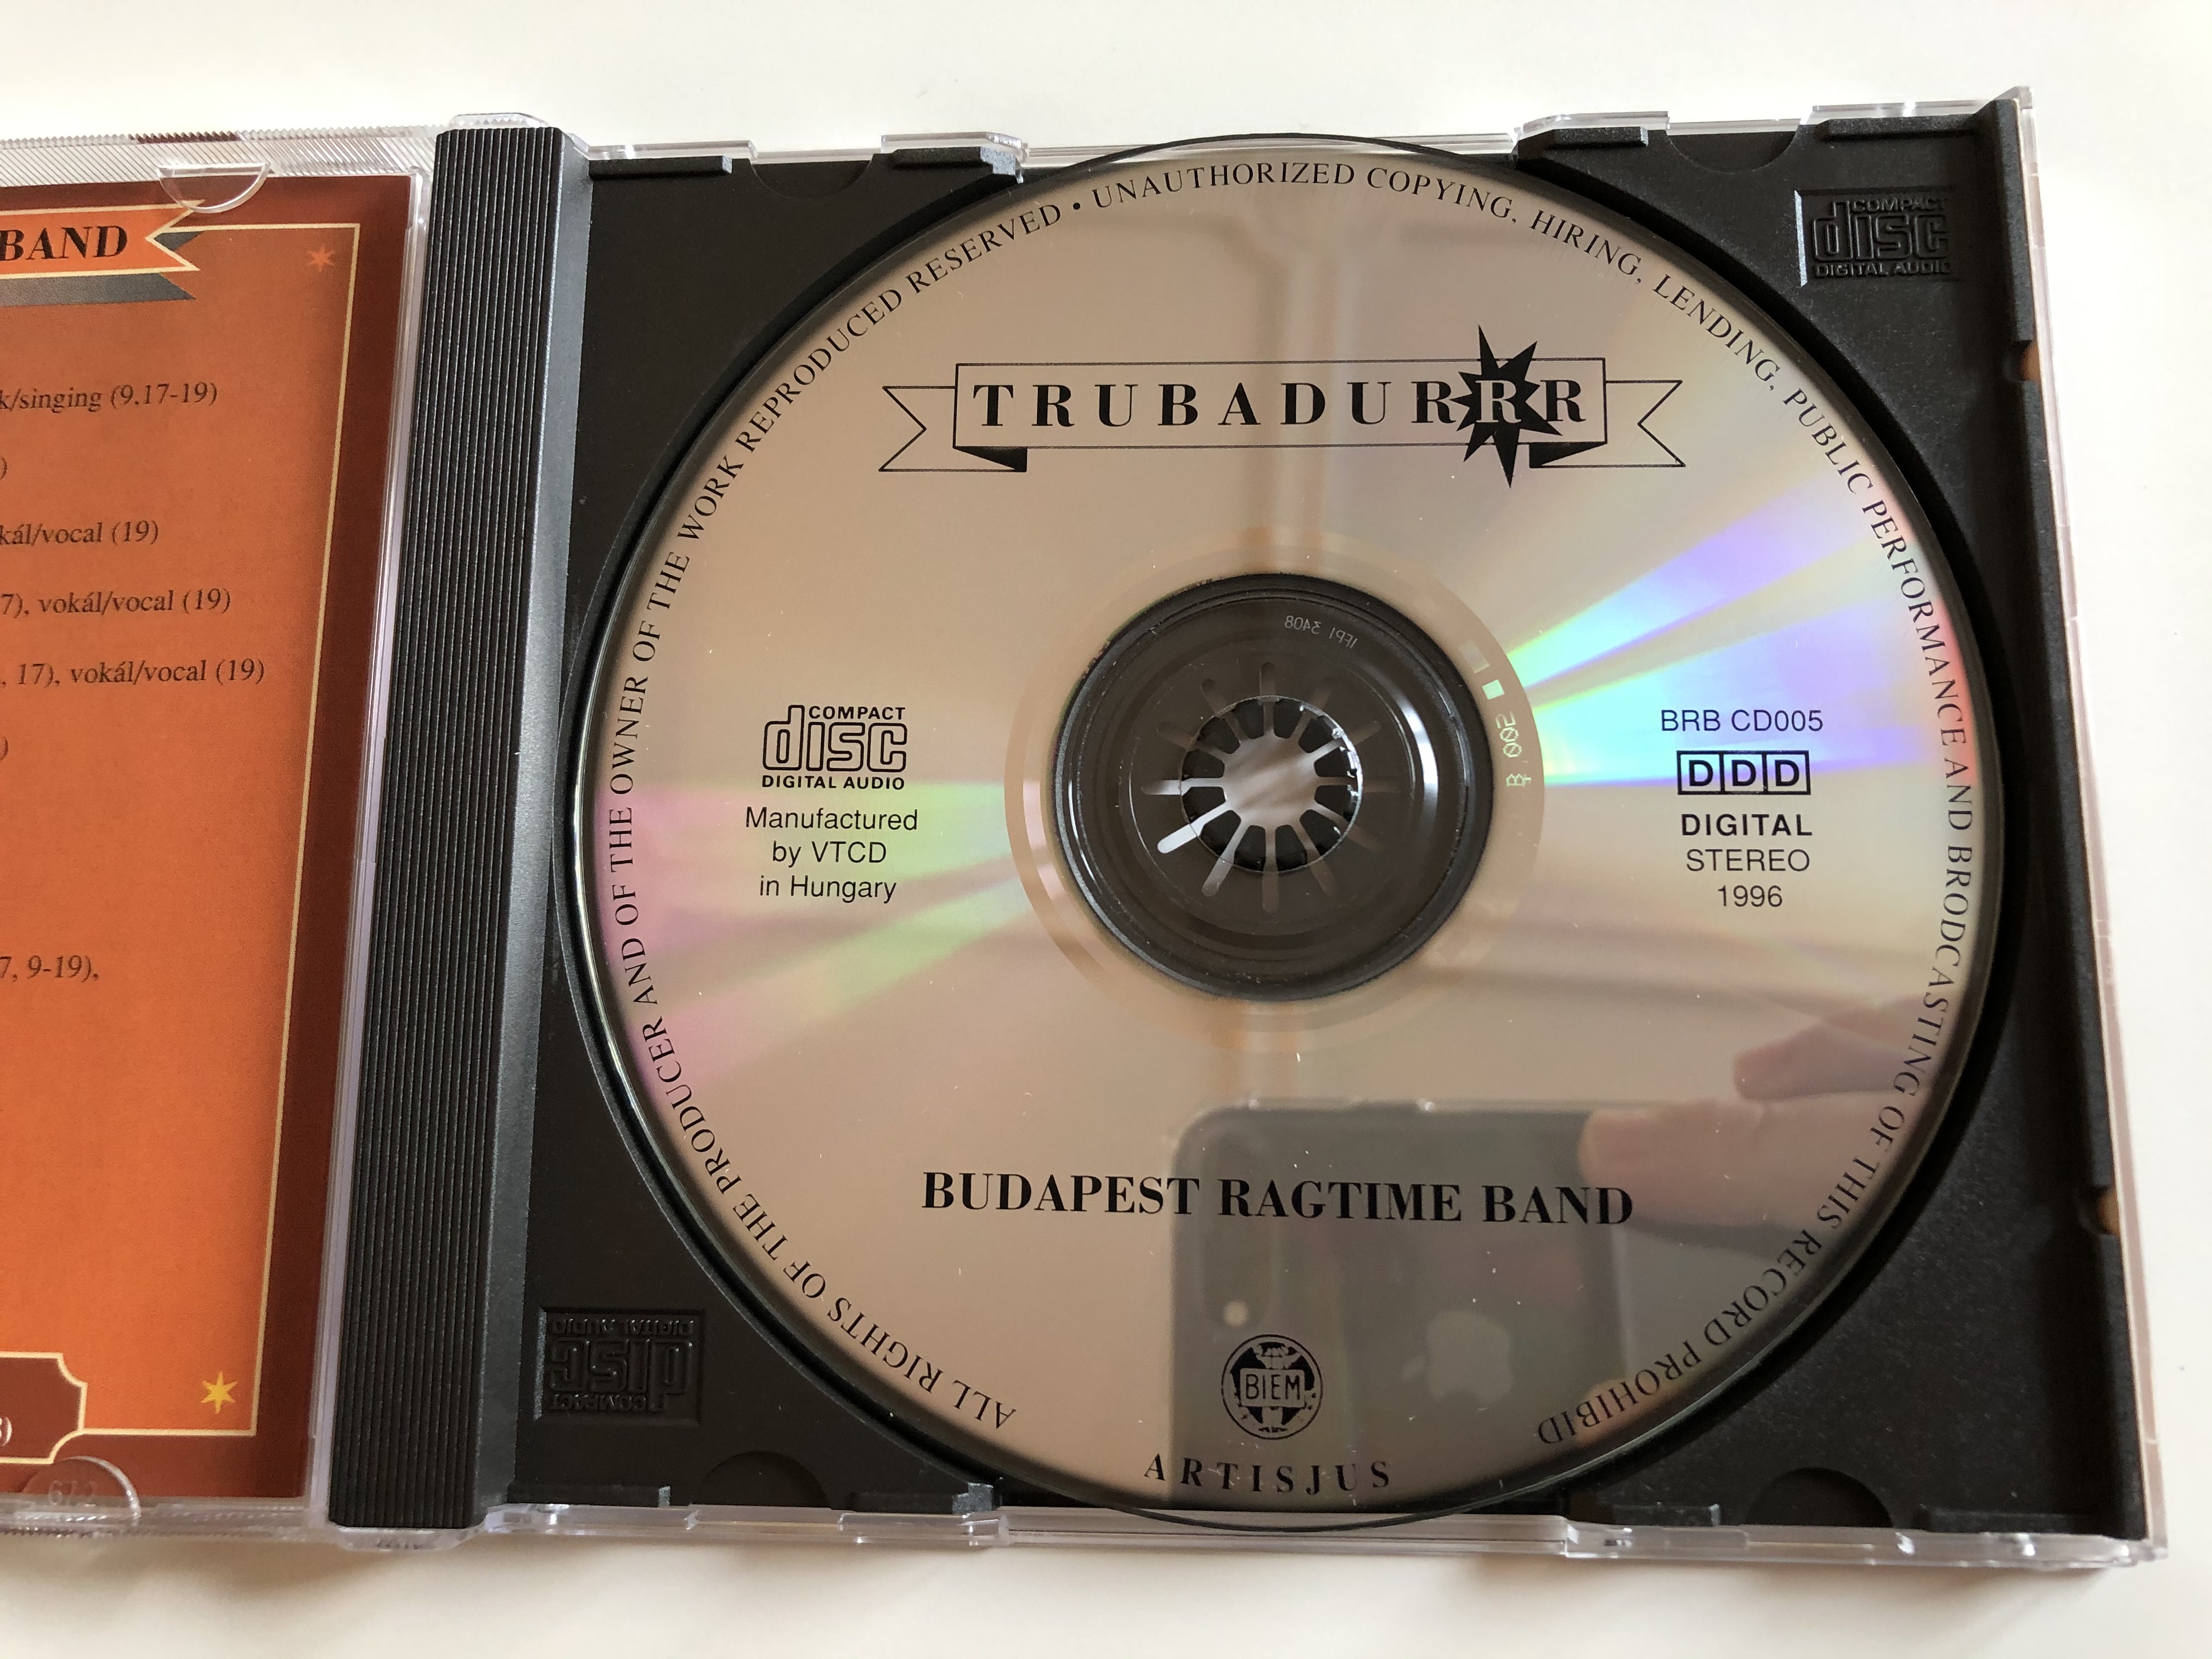 trubadurrr-budapest-ragtime-band-audio-cd-1996-stereo-brb-cd005-5-.jpg